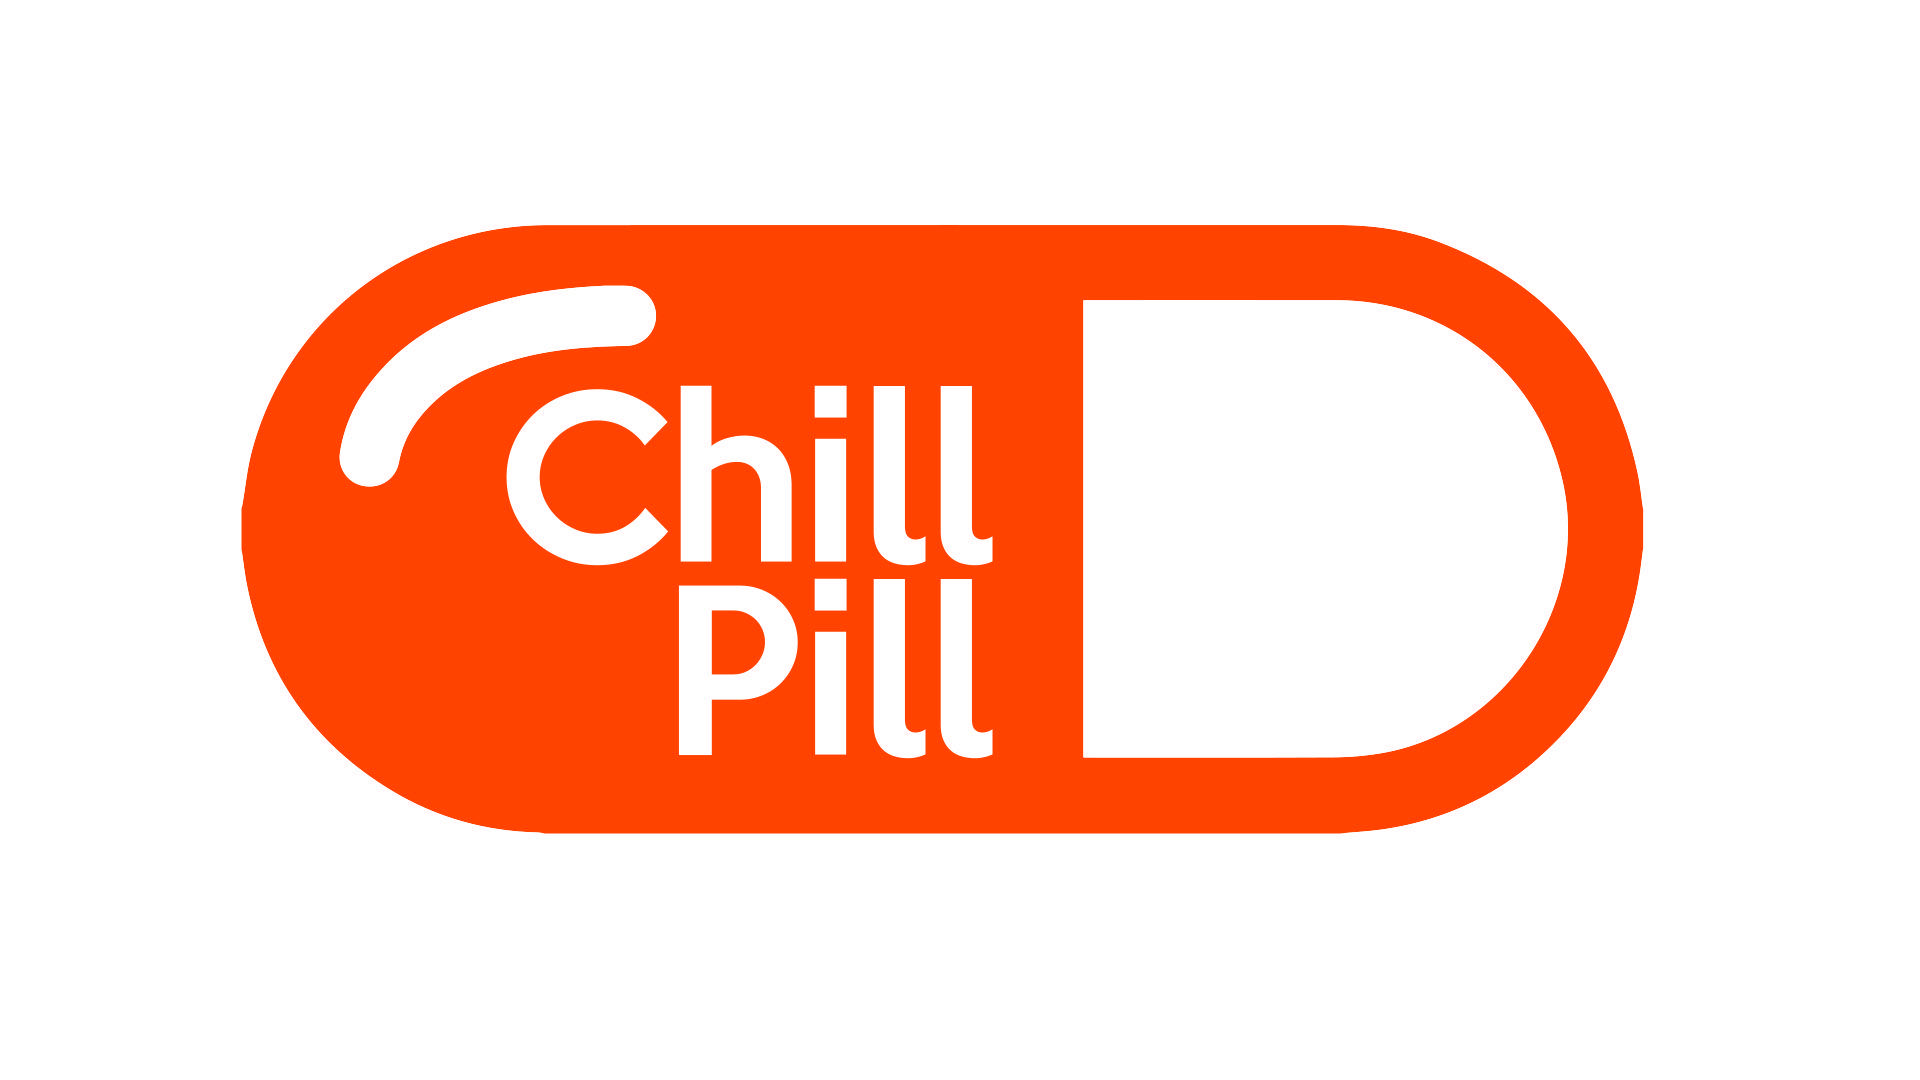 Chill pill. Чил лого. Chill надпись. Chill Pill надпись.